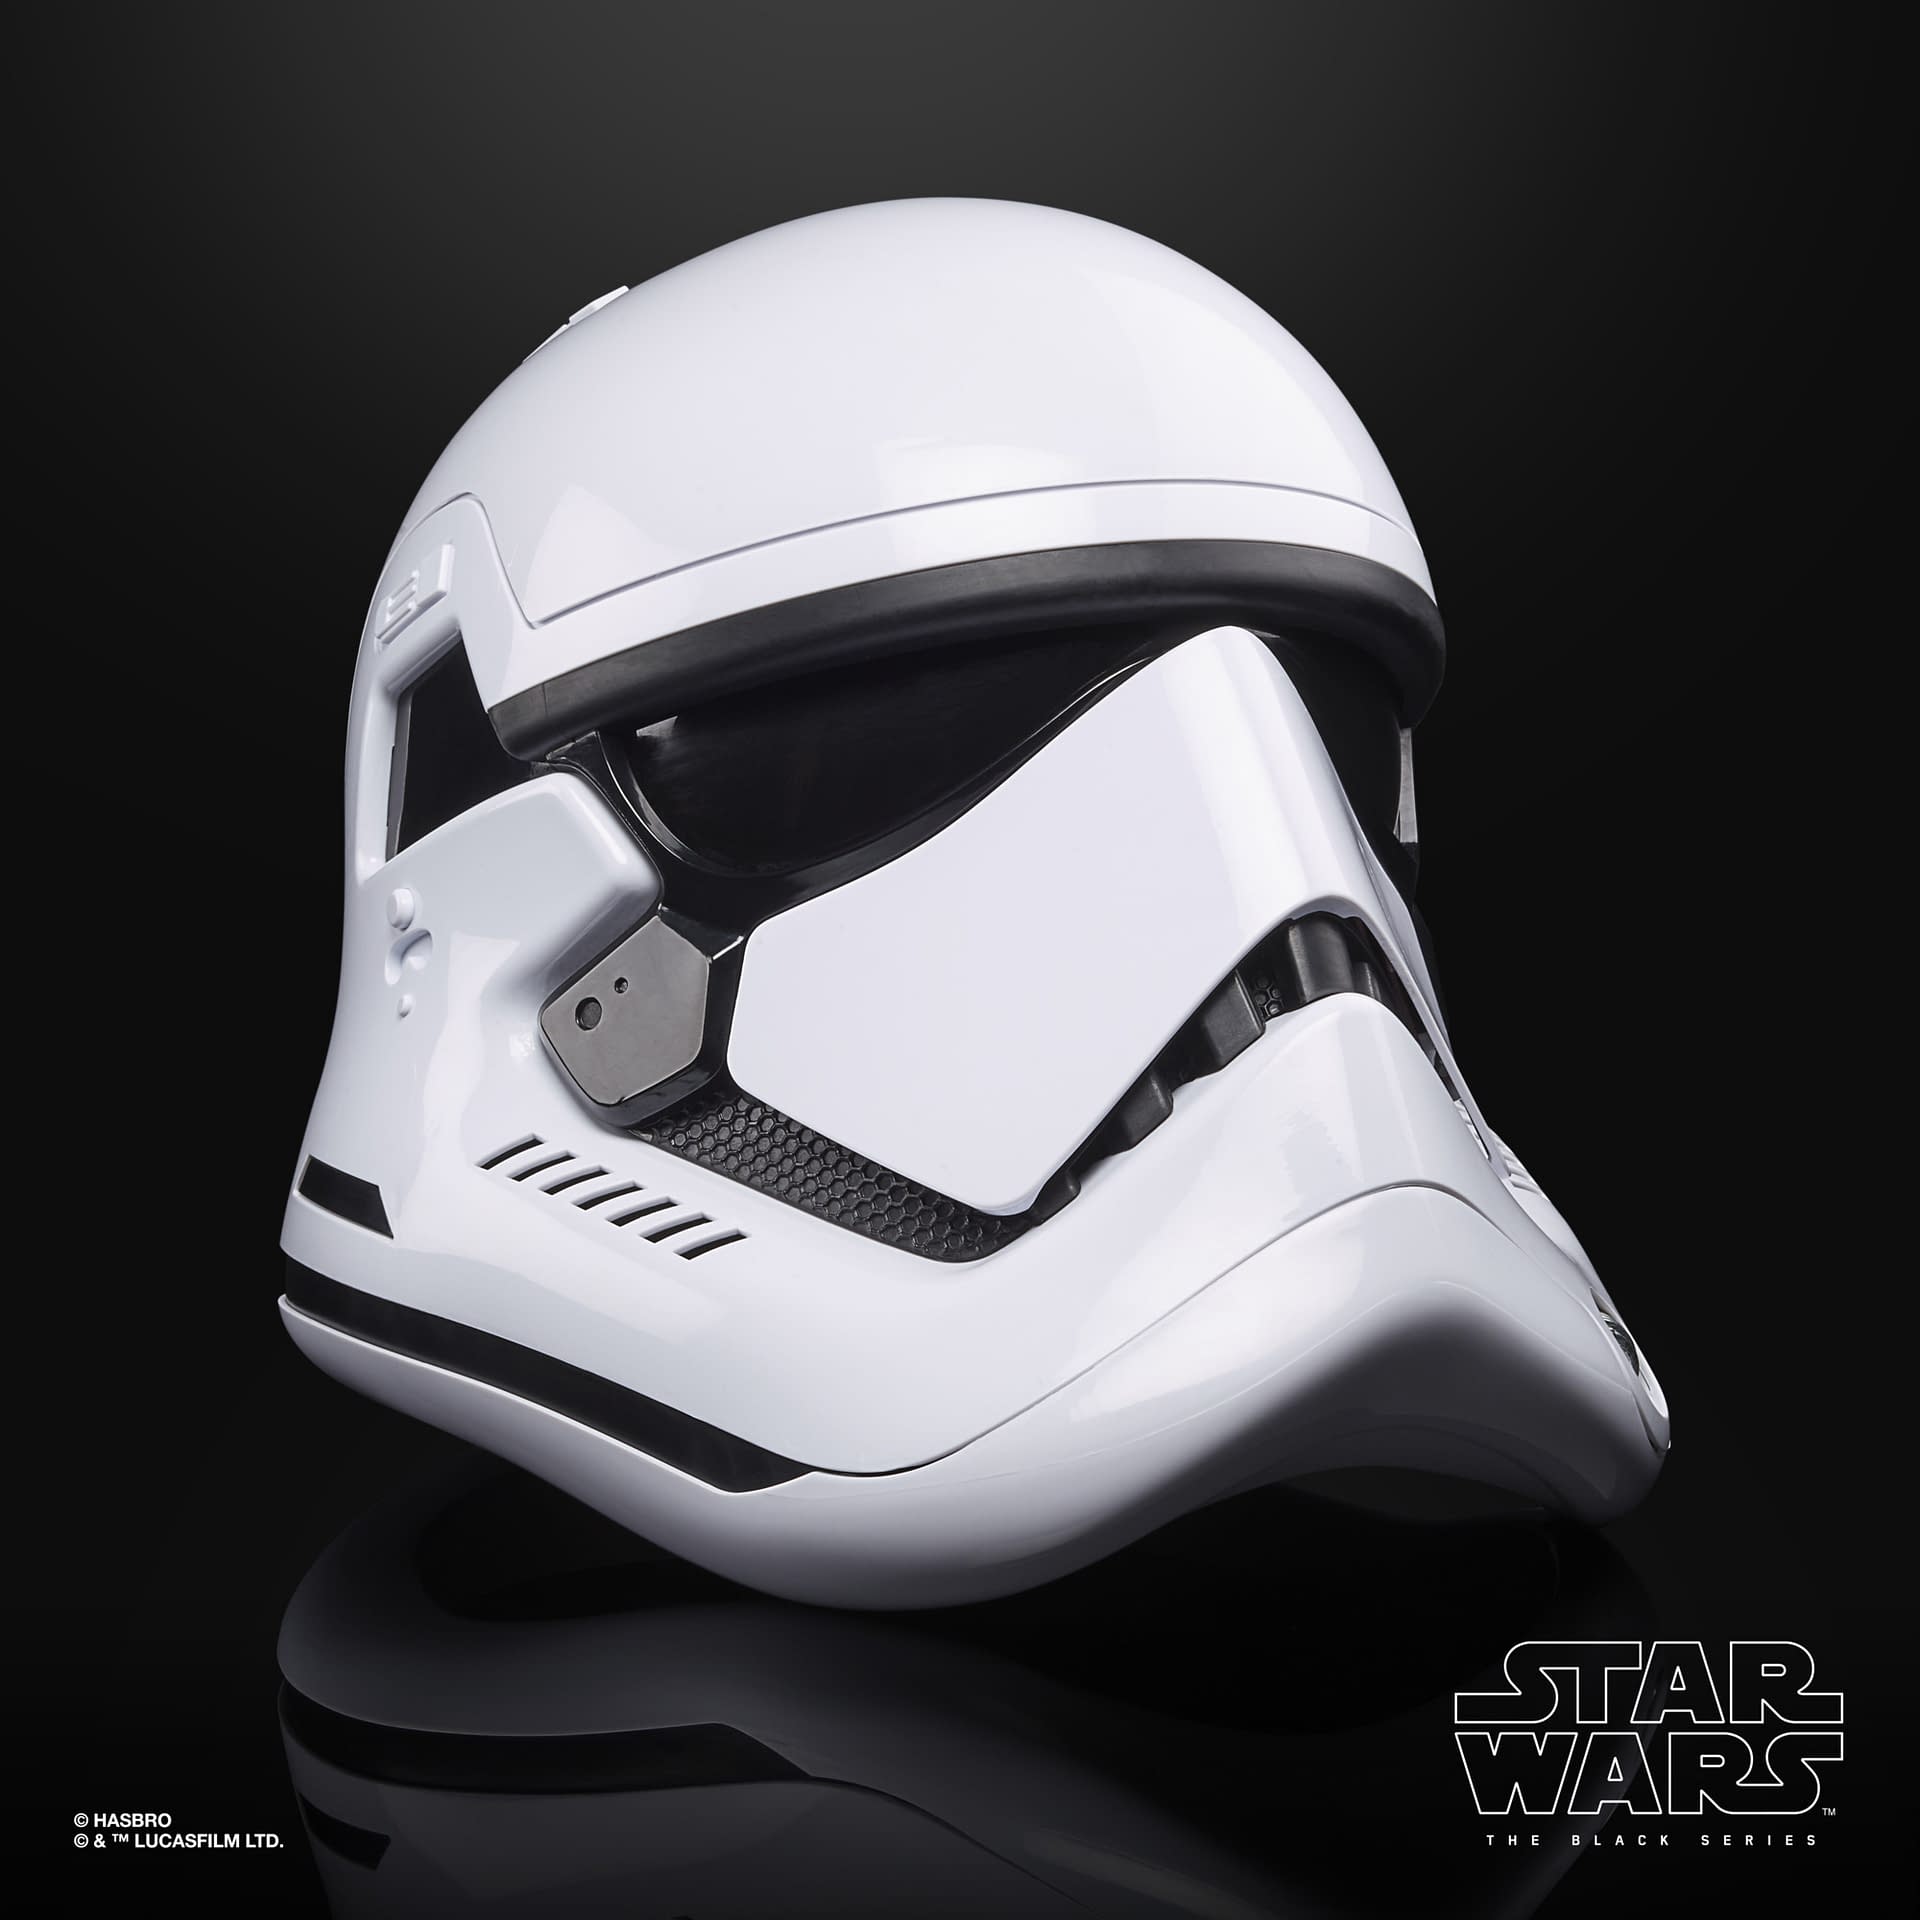 52-56 cm Black Star Wars Kid's The Force Awakens Safety Helmet 